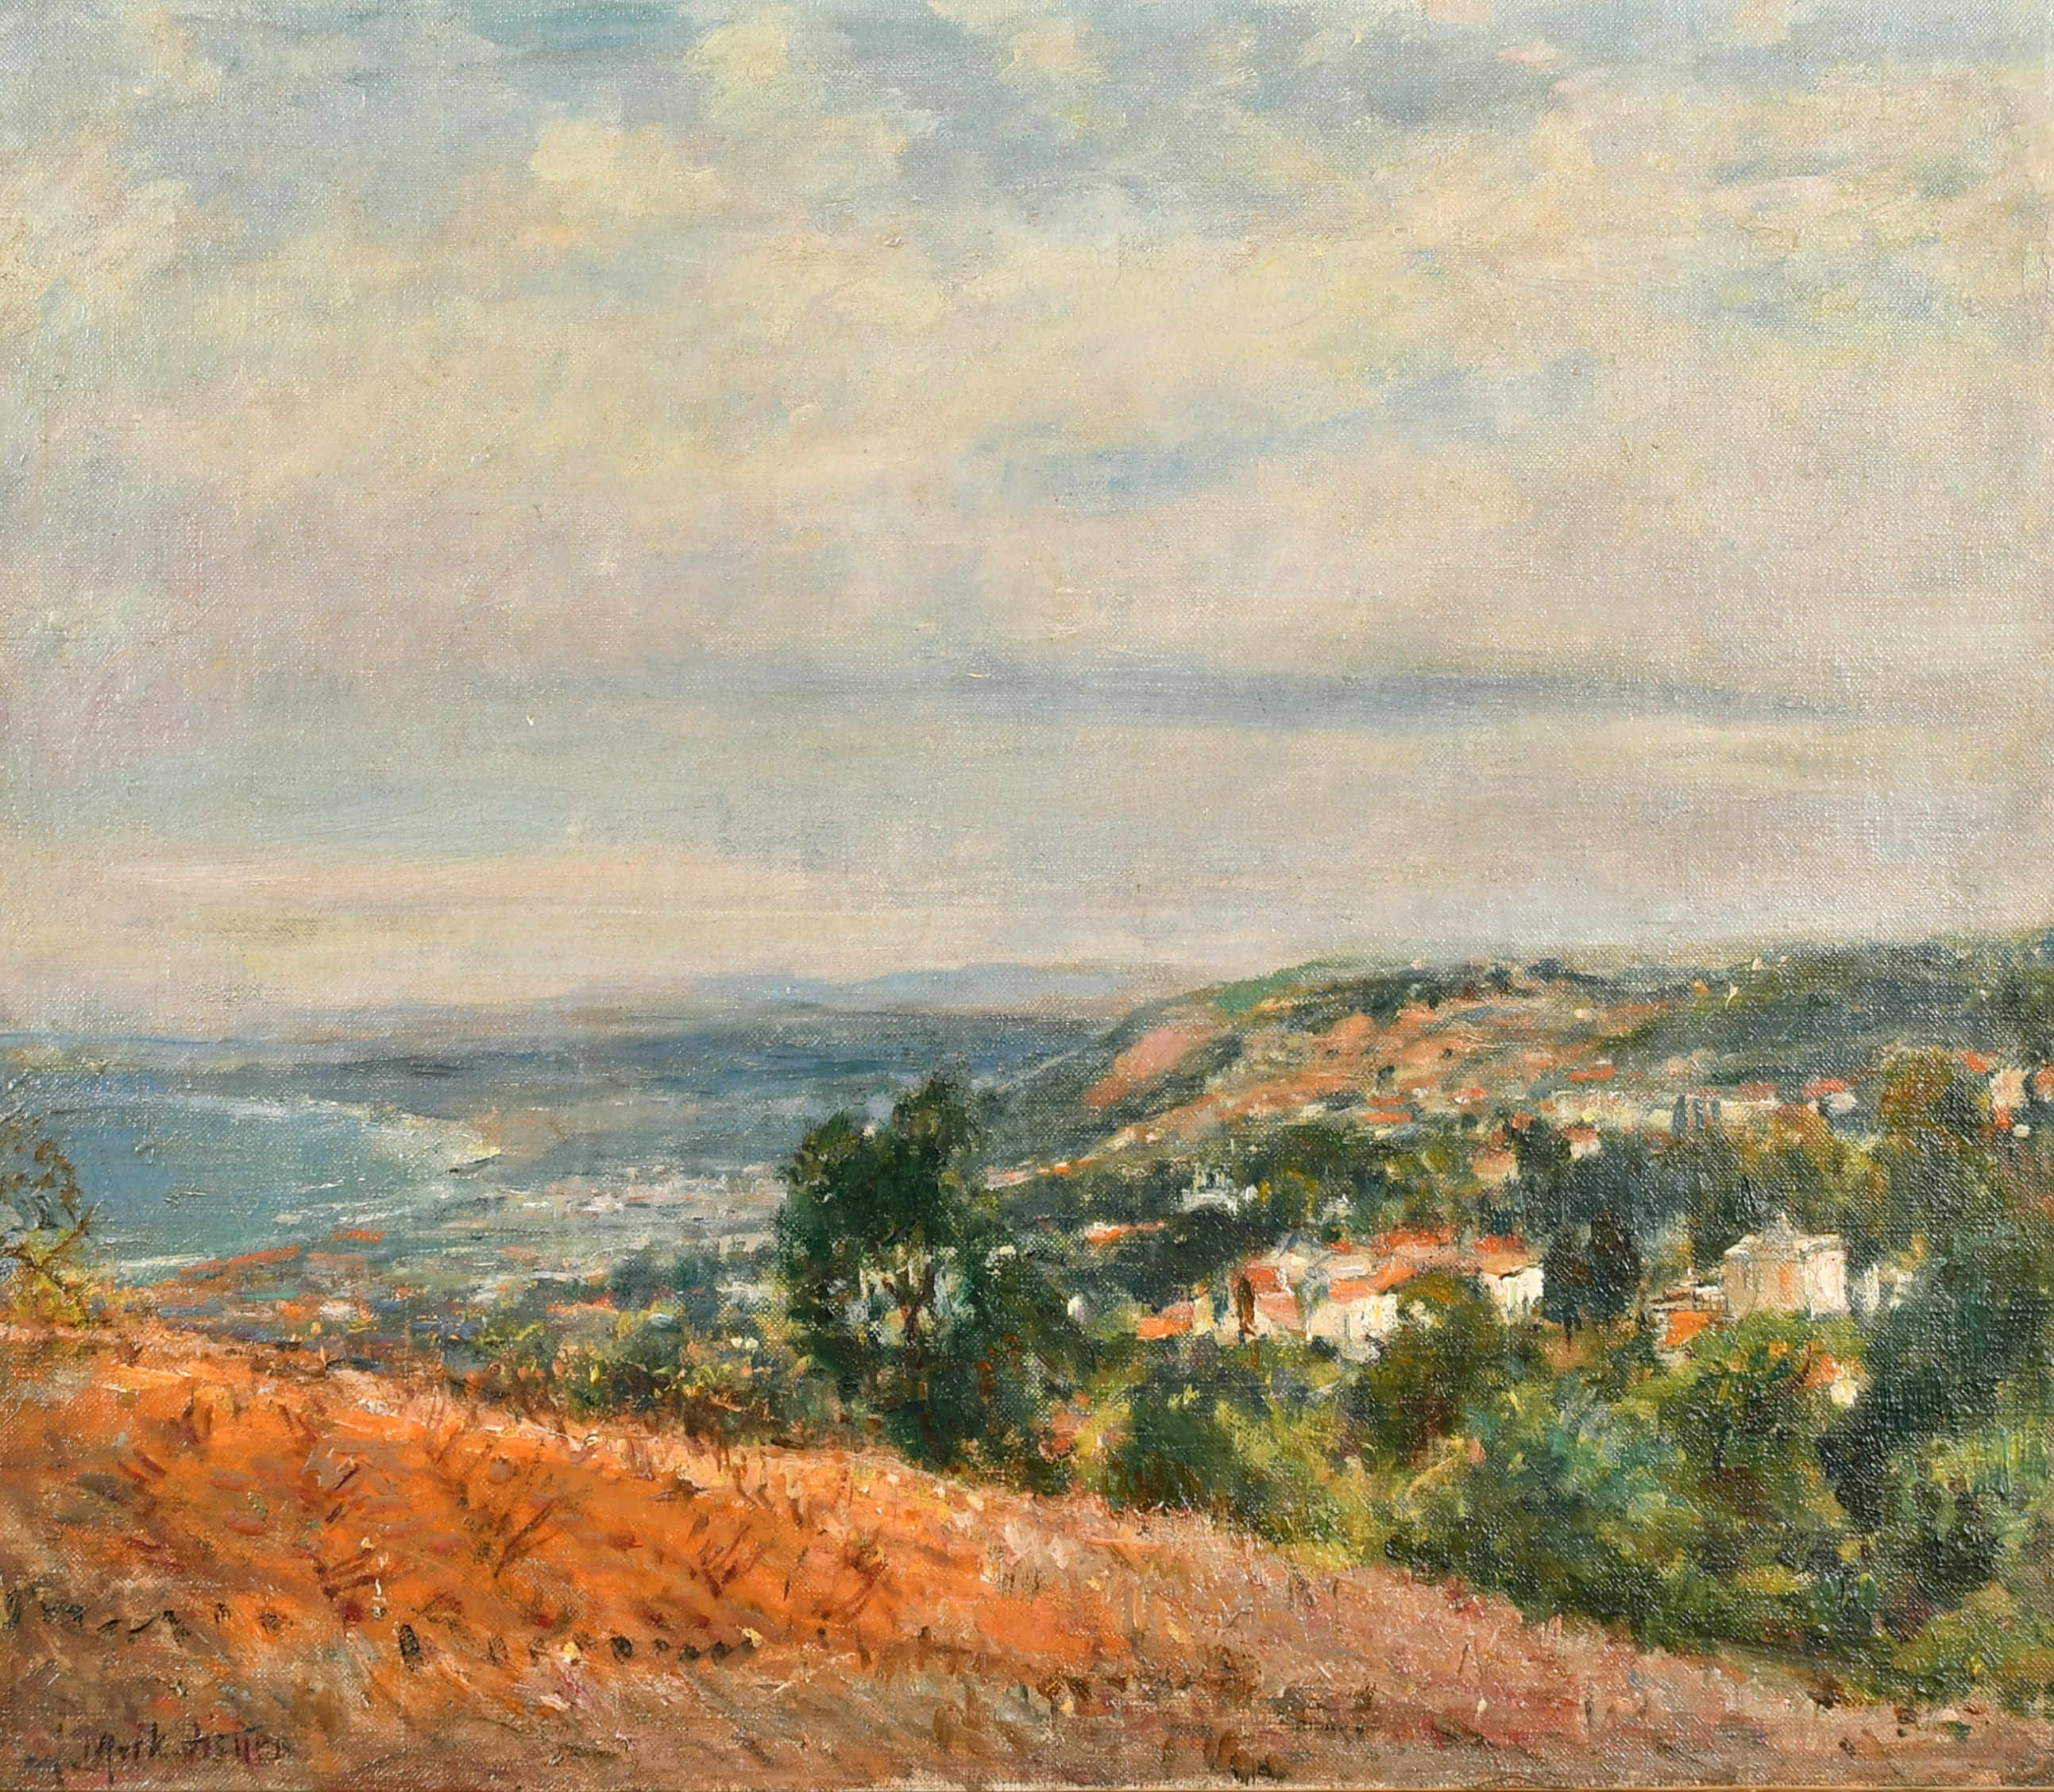 Mark William Fisher (1841-1923) British. A Mediterranean Coastal Scene, Oil on Canvas, Signed, 15.